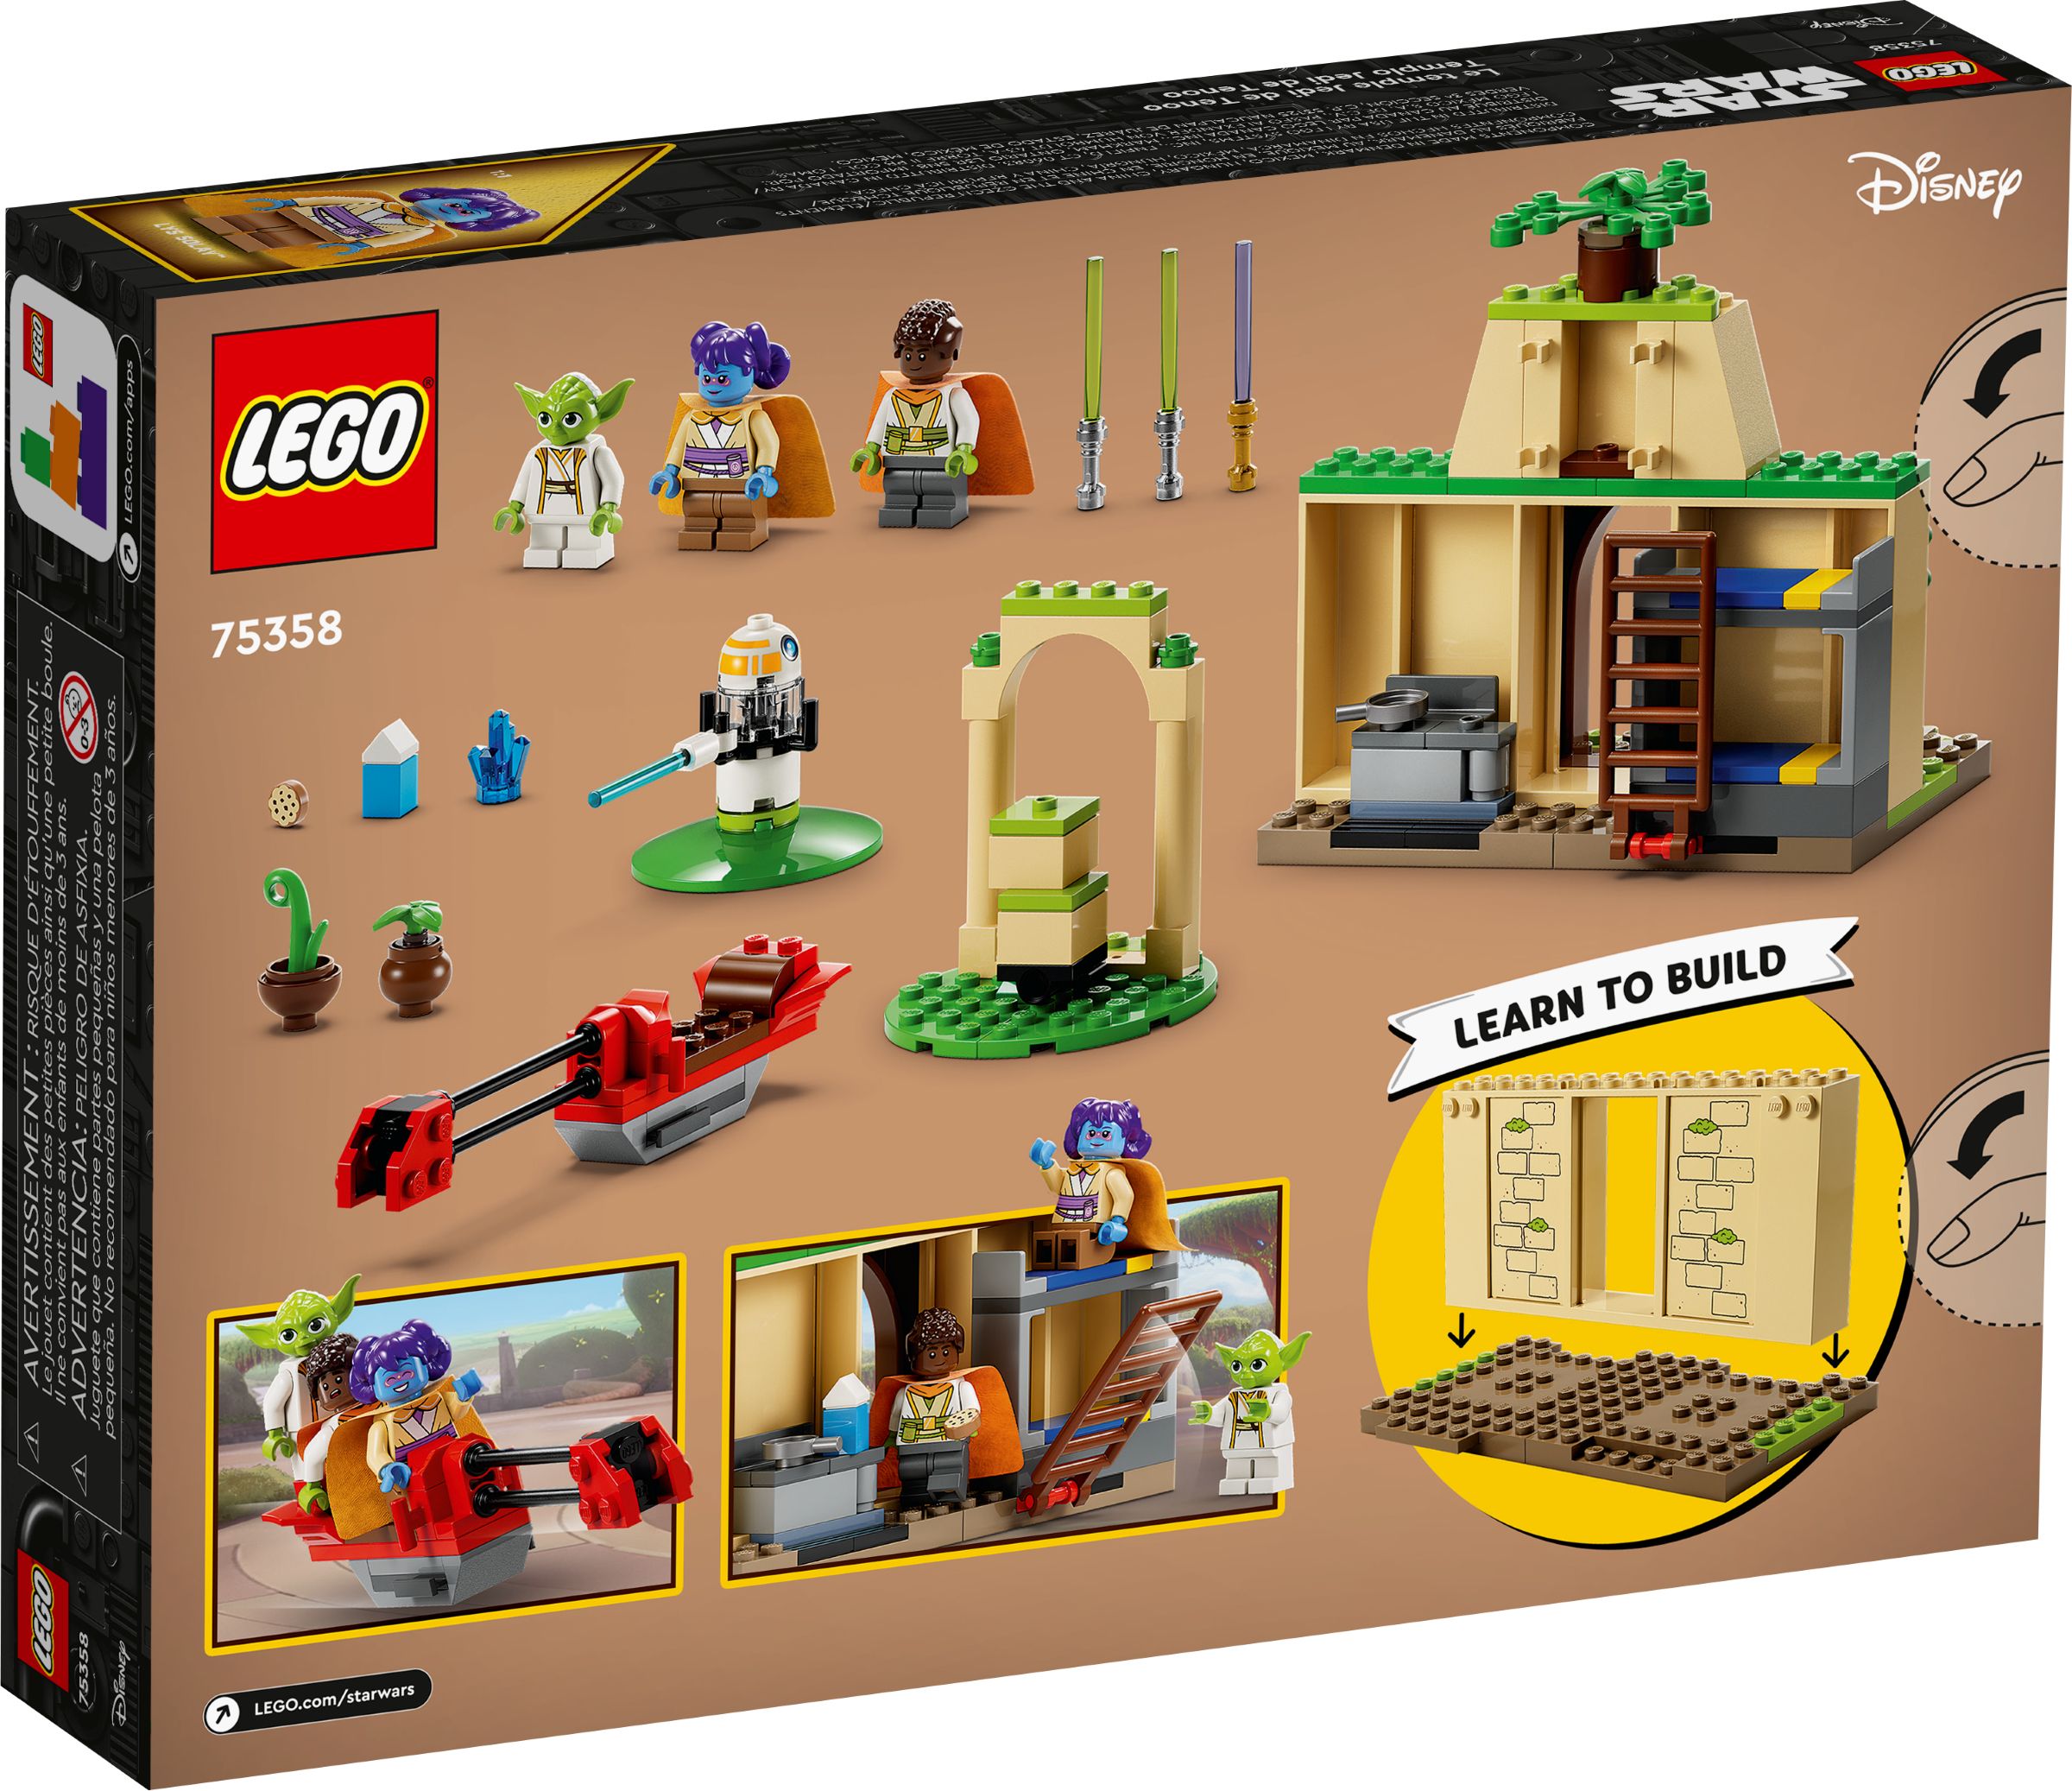 LEGO Star Wars 75358 Tenoo Jedi Temple™ LEGO_75358_alt6.jpg